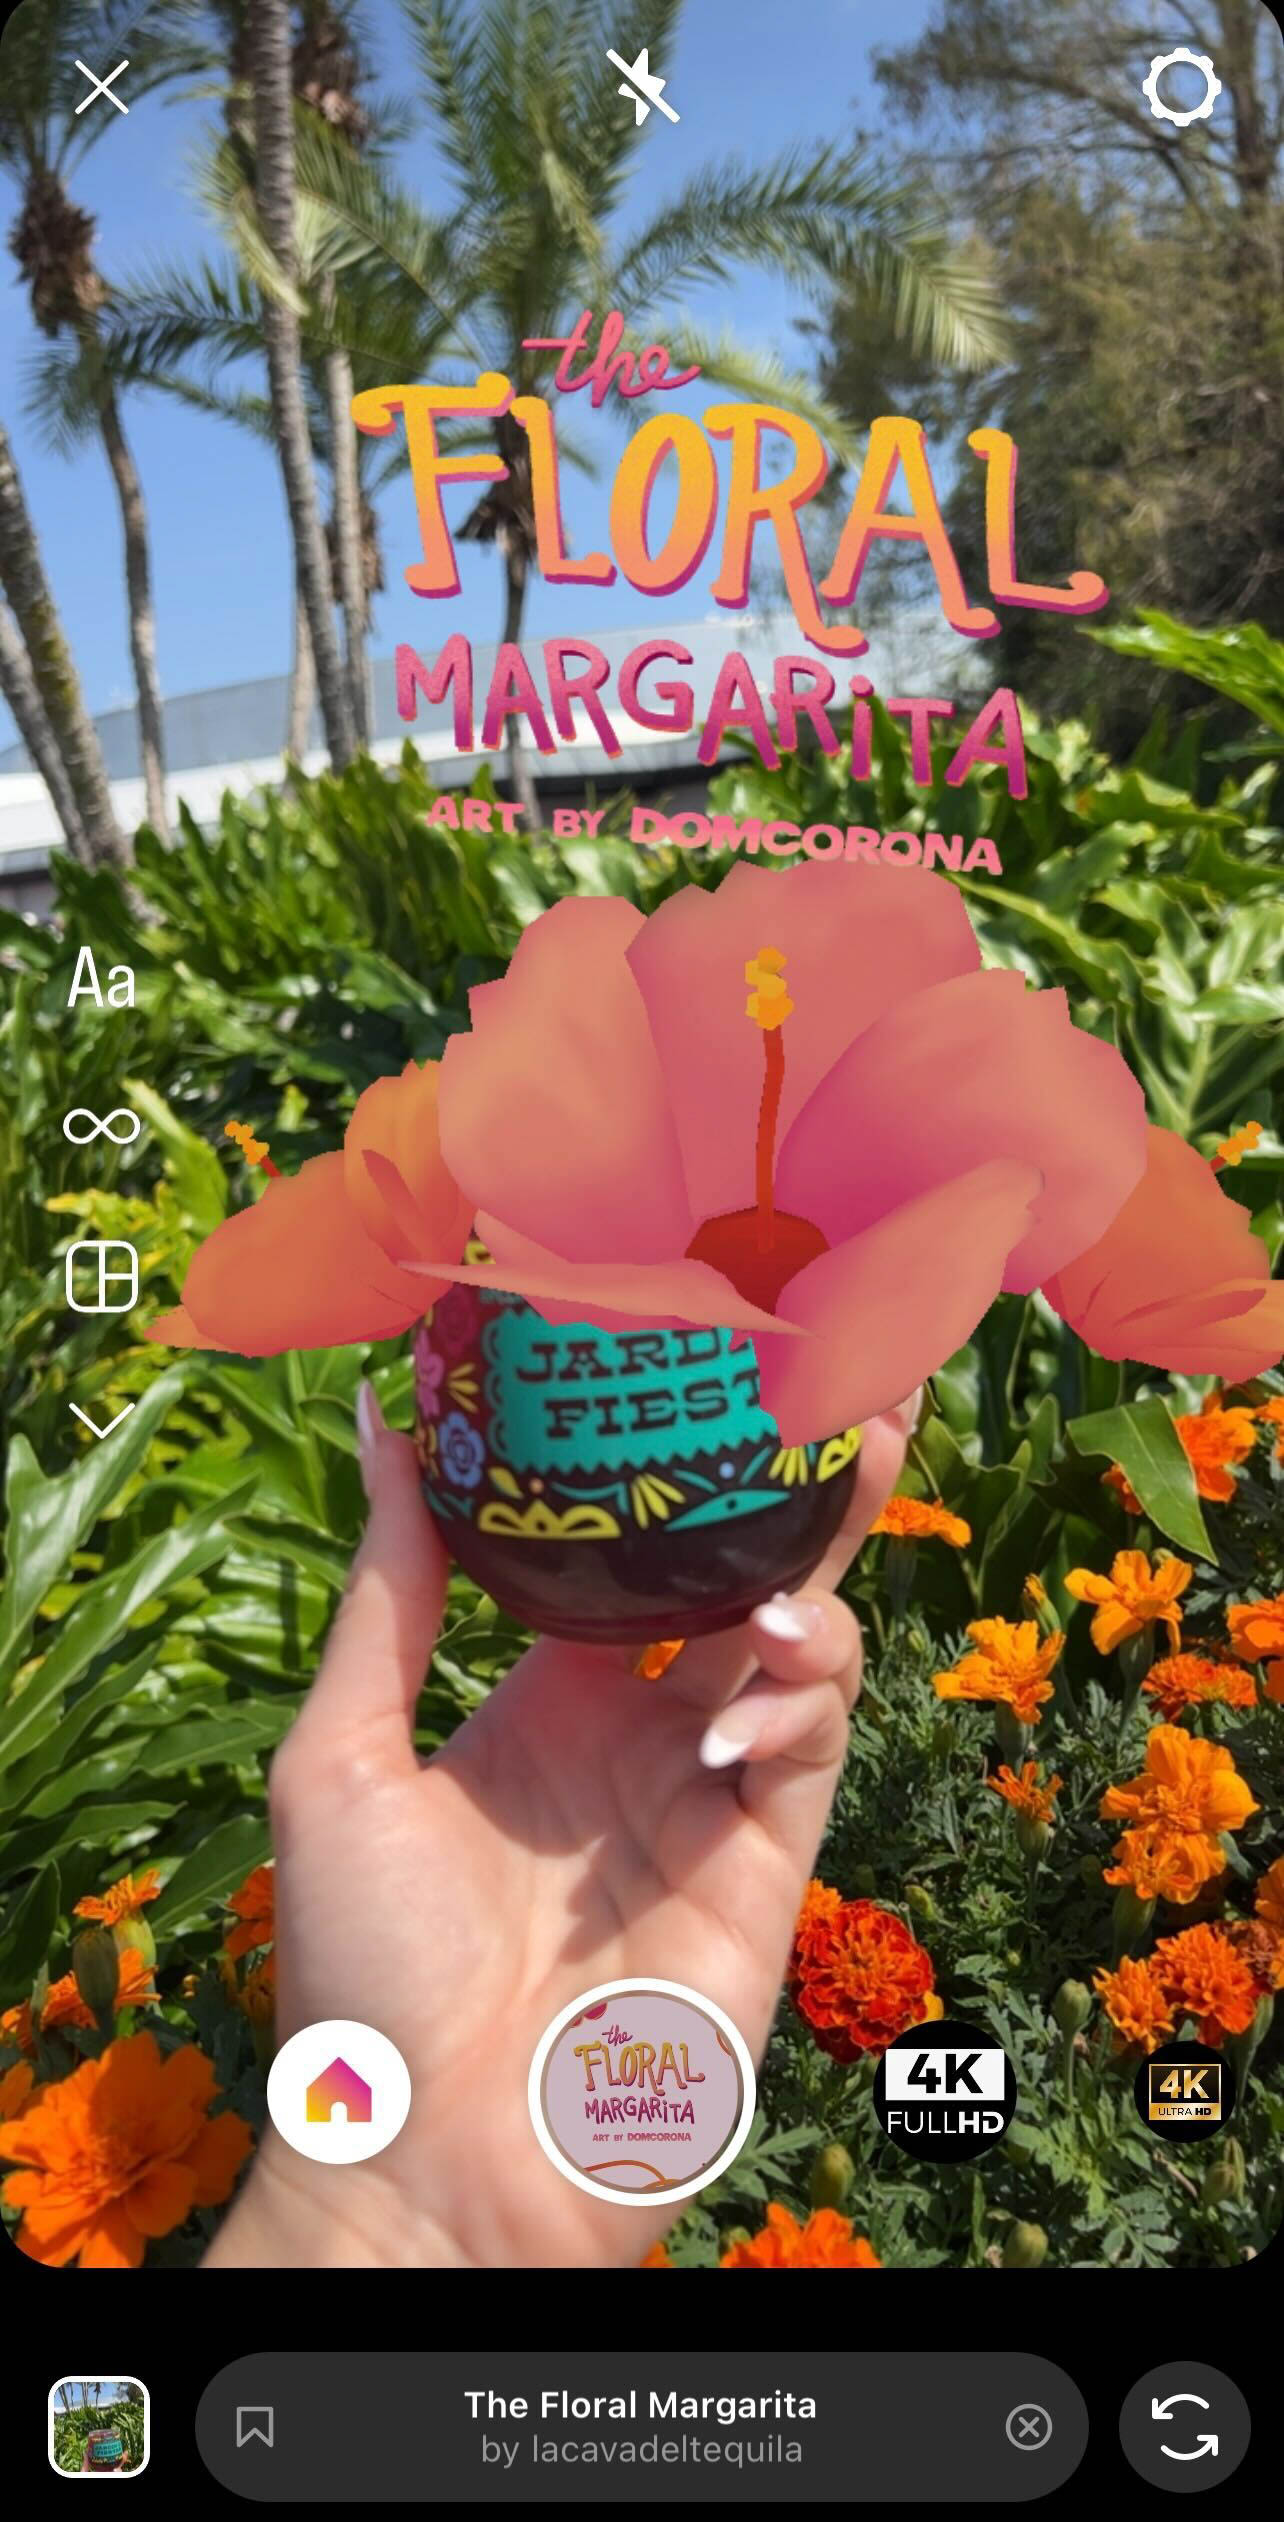 Floral Margarita Instagram filter